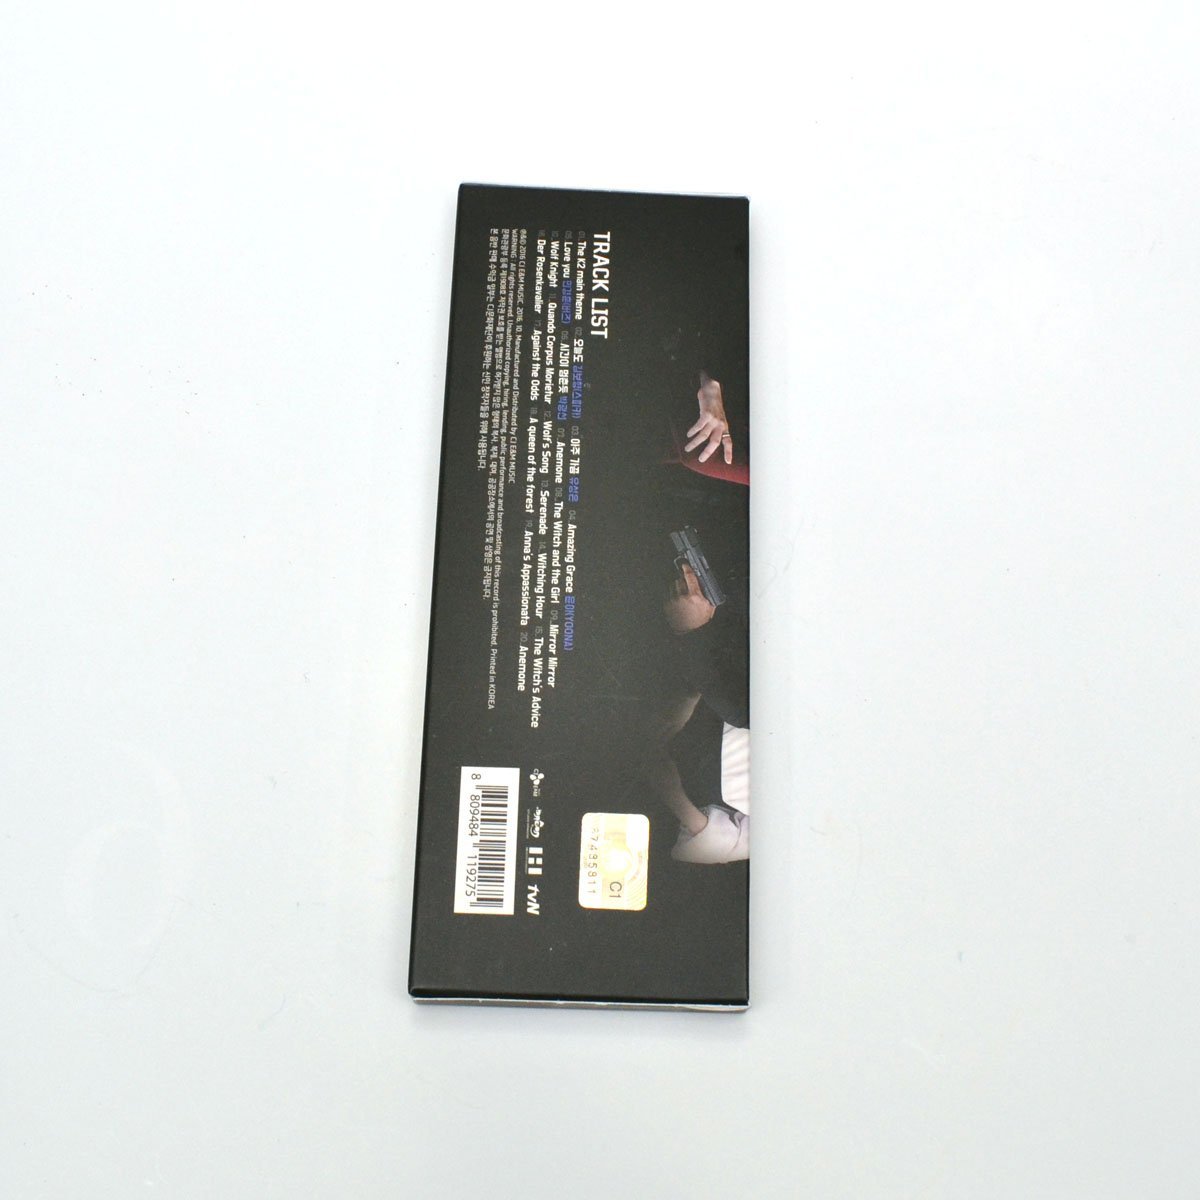 [CD] THE K2 ORIGINAL SOUND TRACK 韓国ドラマOST [輸入盤] CMAC10934 [S601216]_画像4